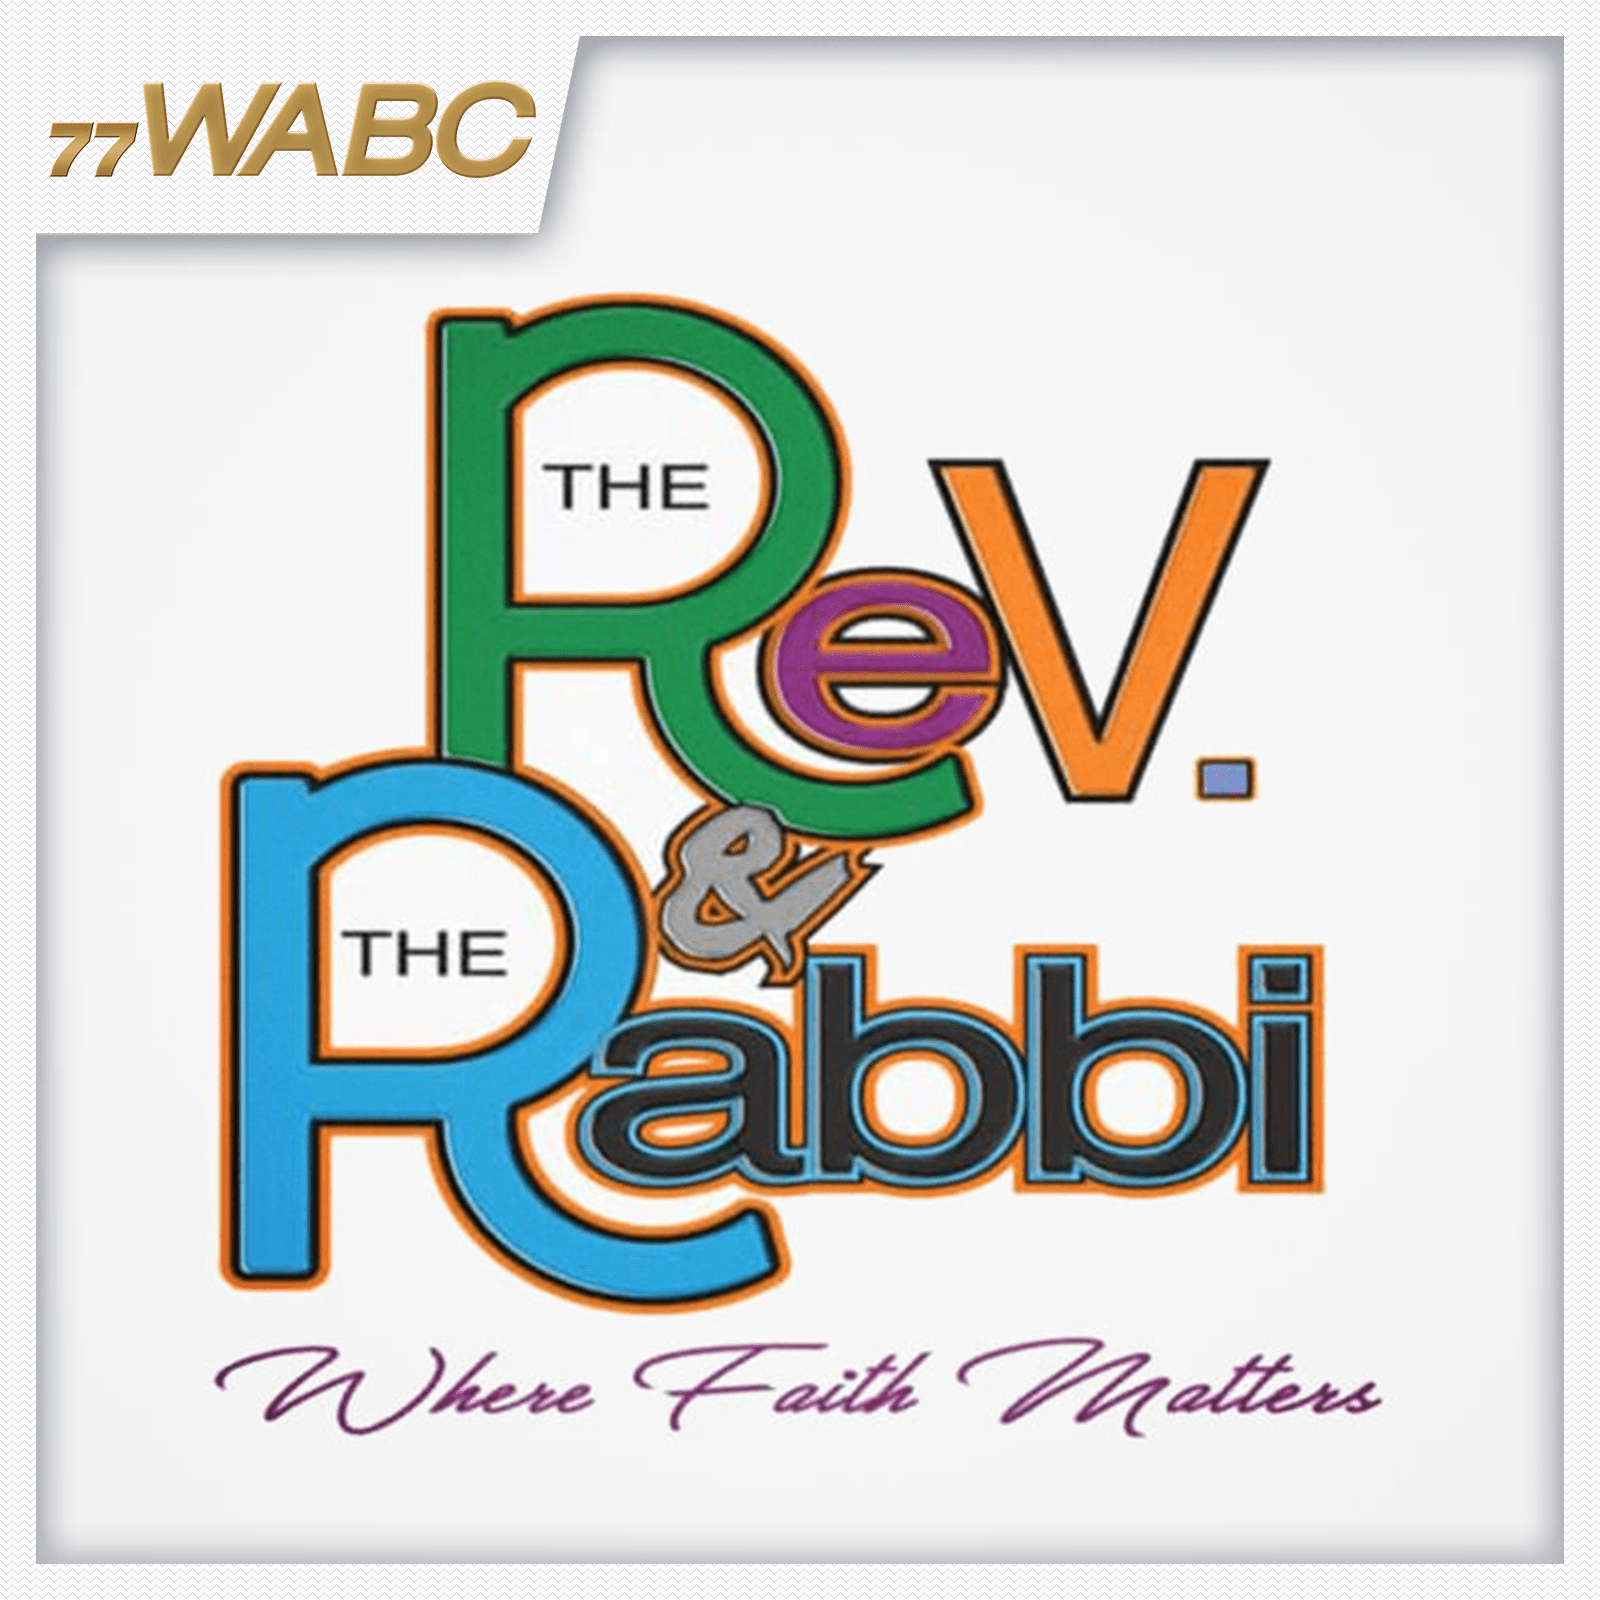 rev-and-the-rabbi-new-logo547956